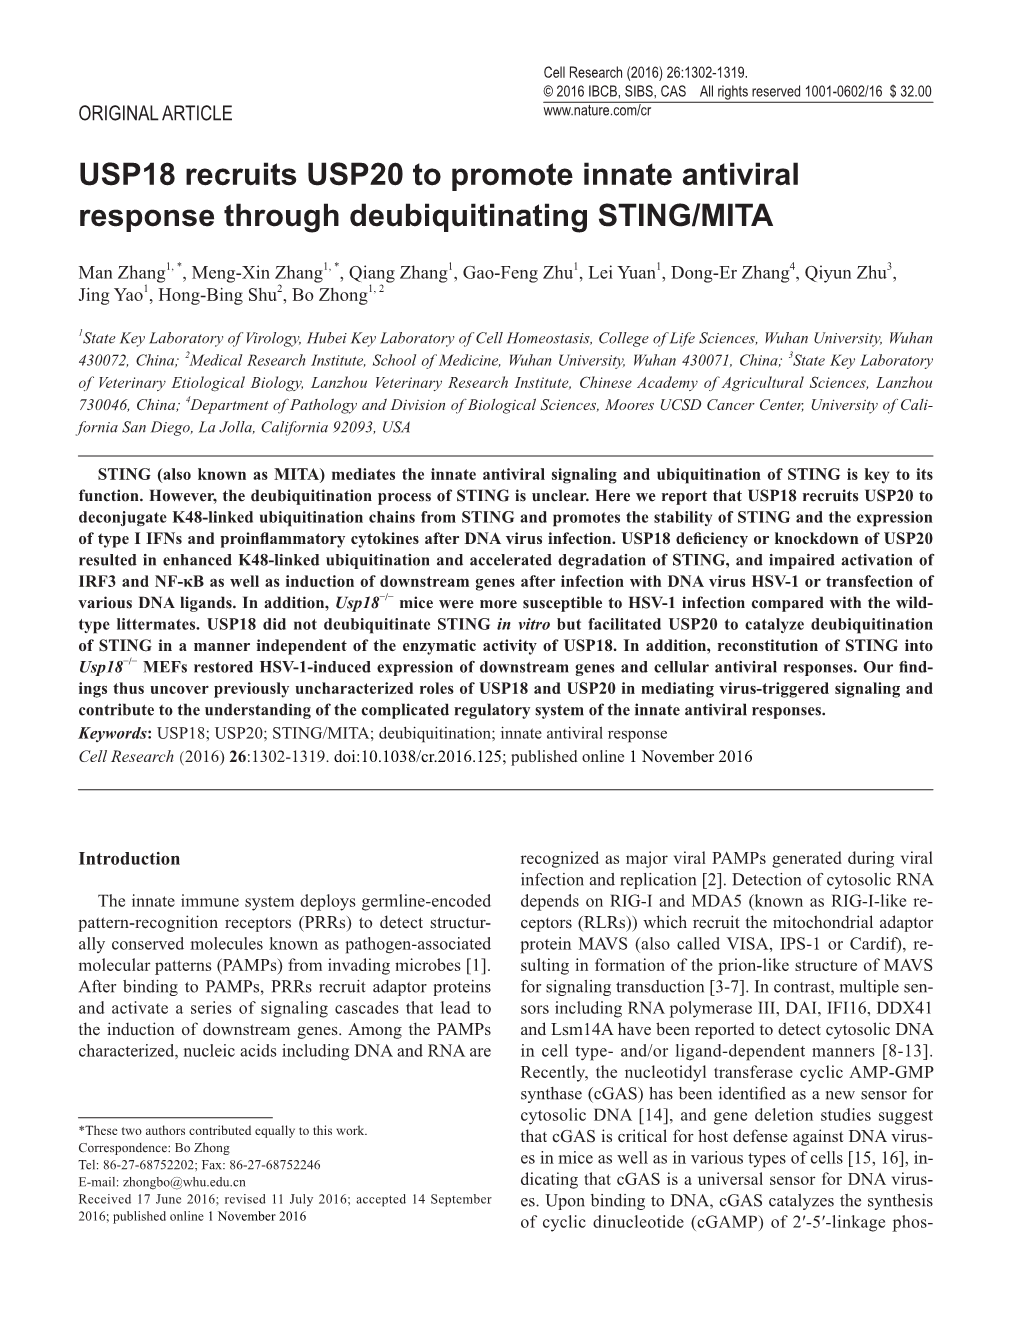 USP18 Recruits USP20 to Promote Innate Antiviral Response Through Deubiquitinating STING/MITA